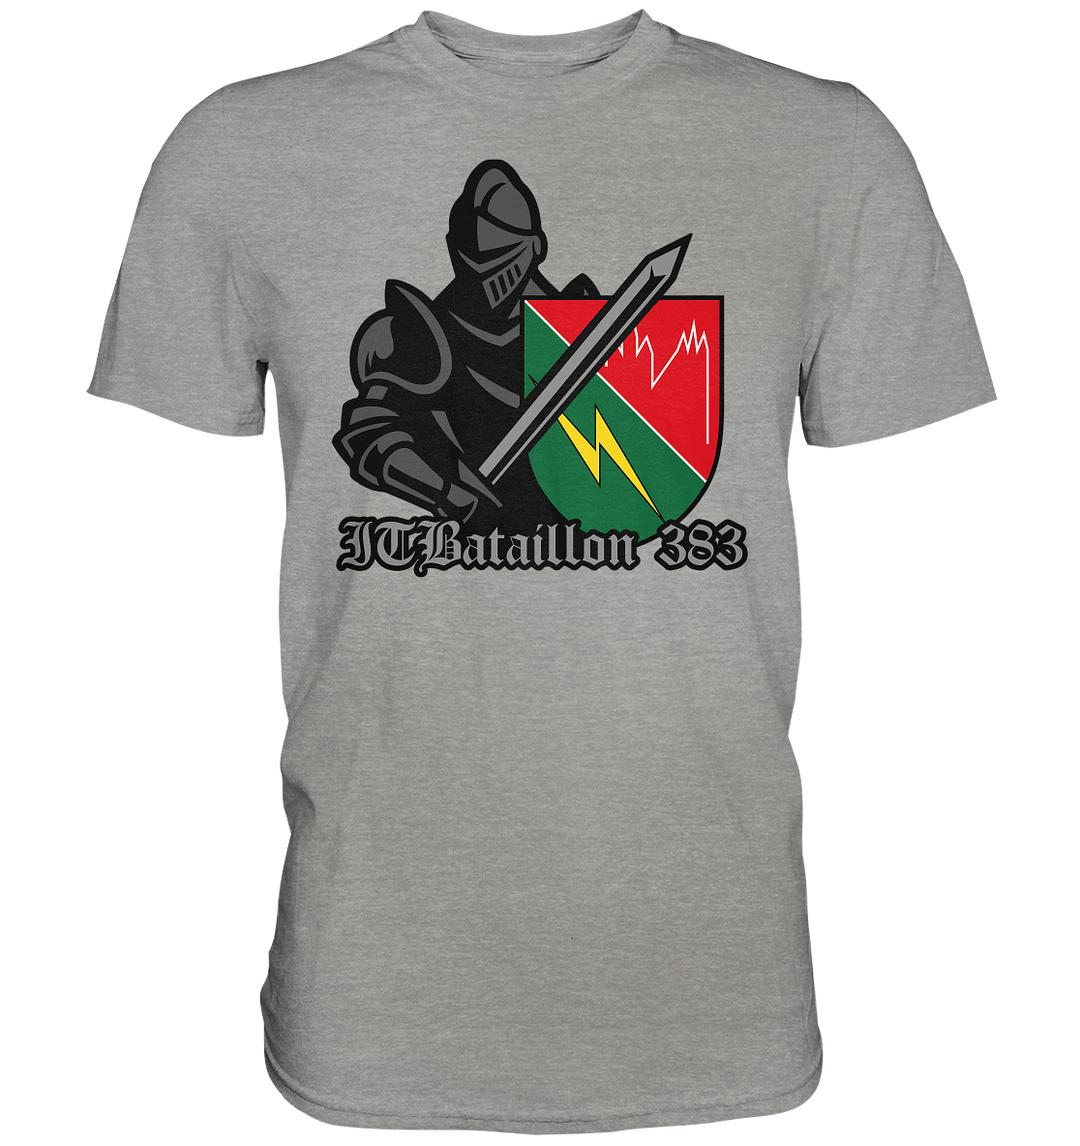 "IT Bataillon 383 - Ritter" - Premium Shirt